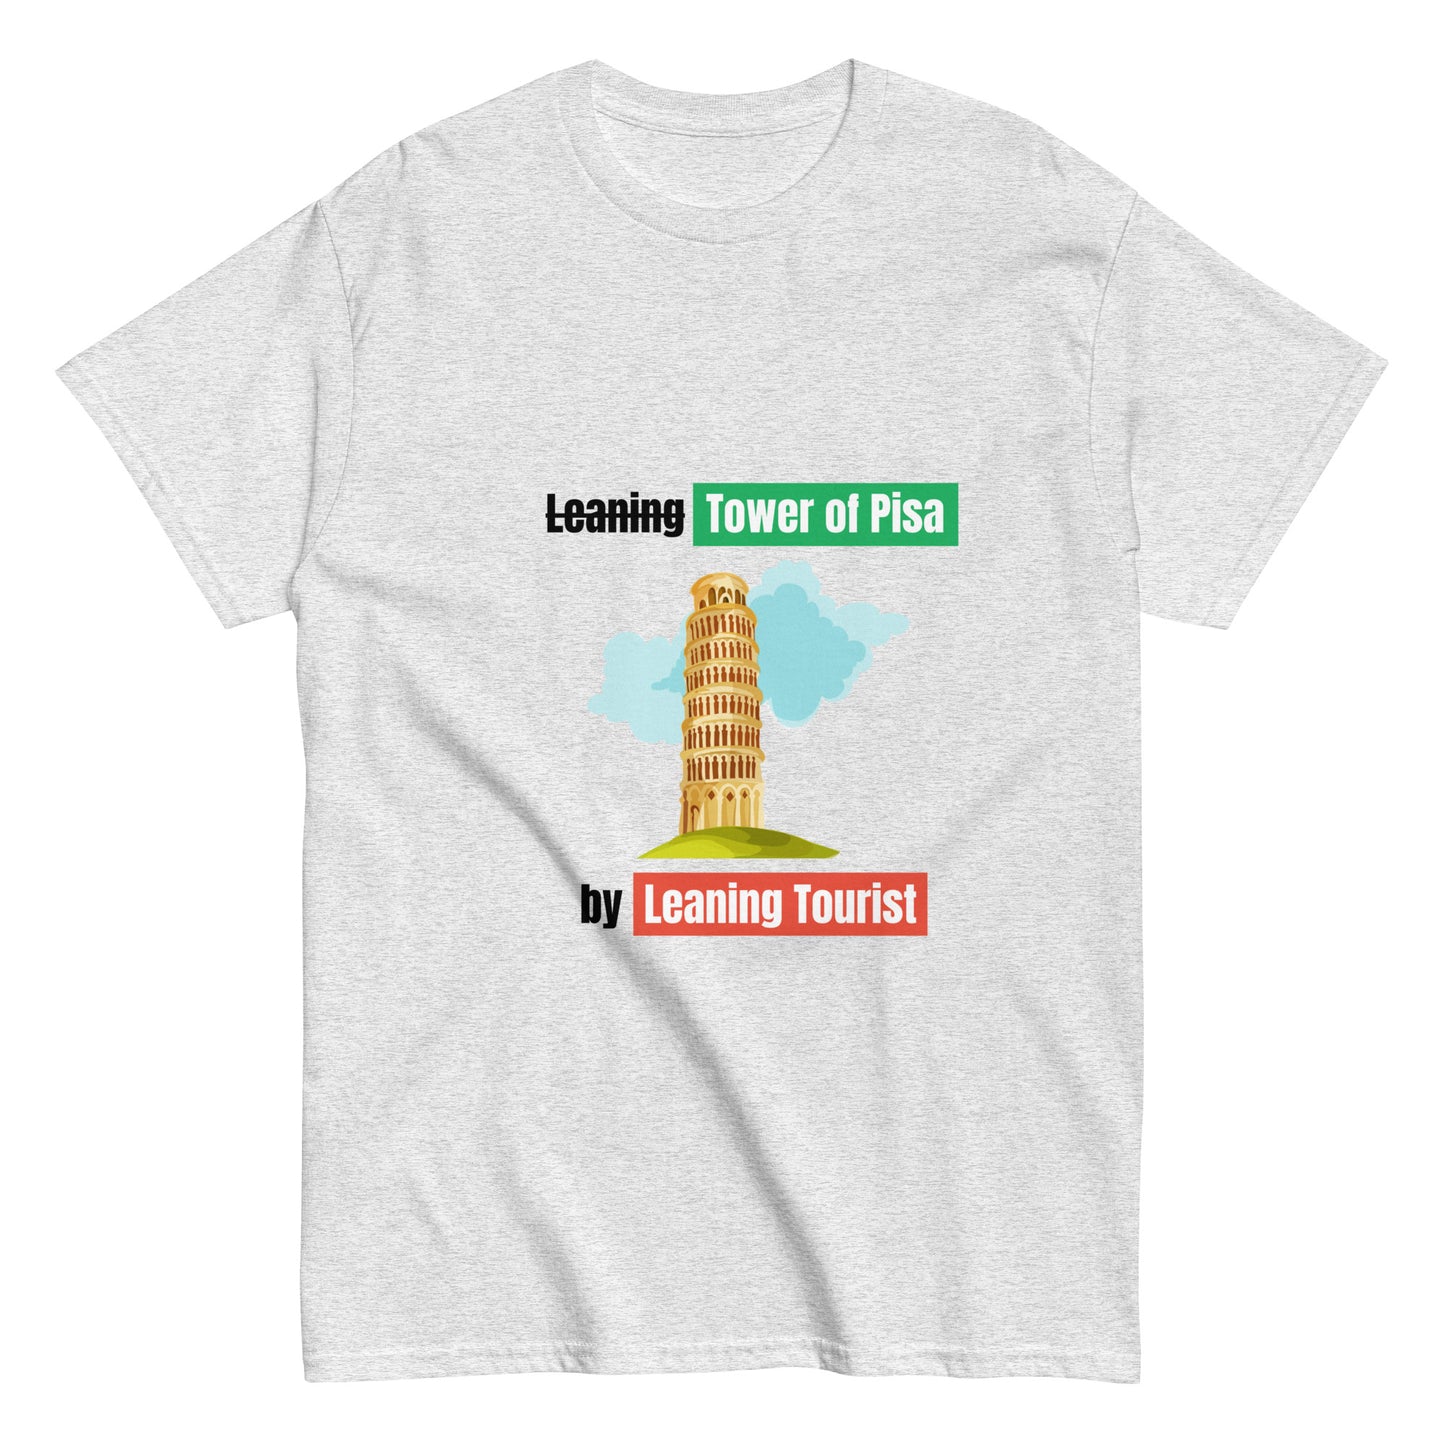 Pisa Humorous T-shirt, Landmark, Italian, Funny, Witty, Tourist, Travel jokes, Dad jokes, Tower of Pisa, Witty perspective, Unisex, Building